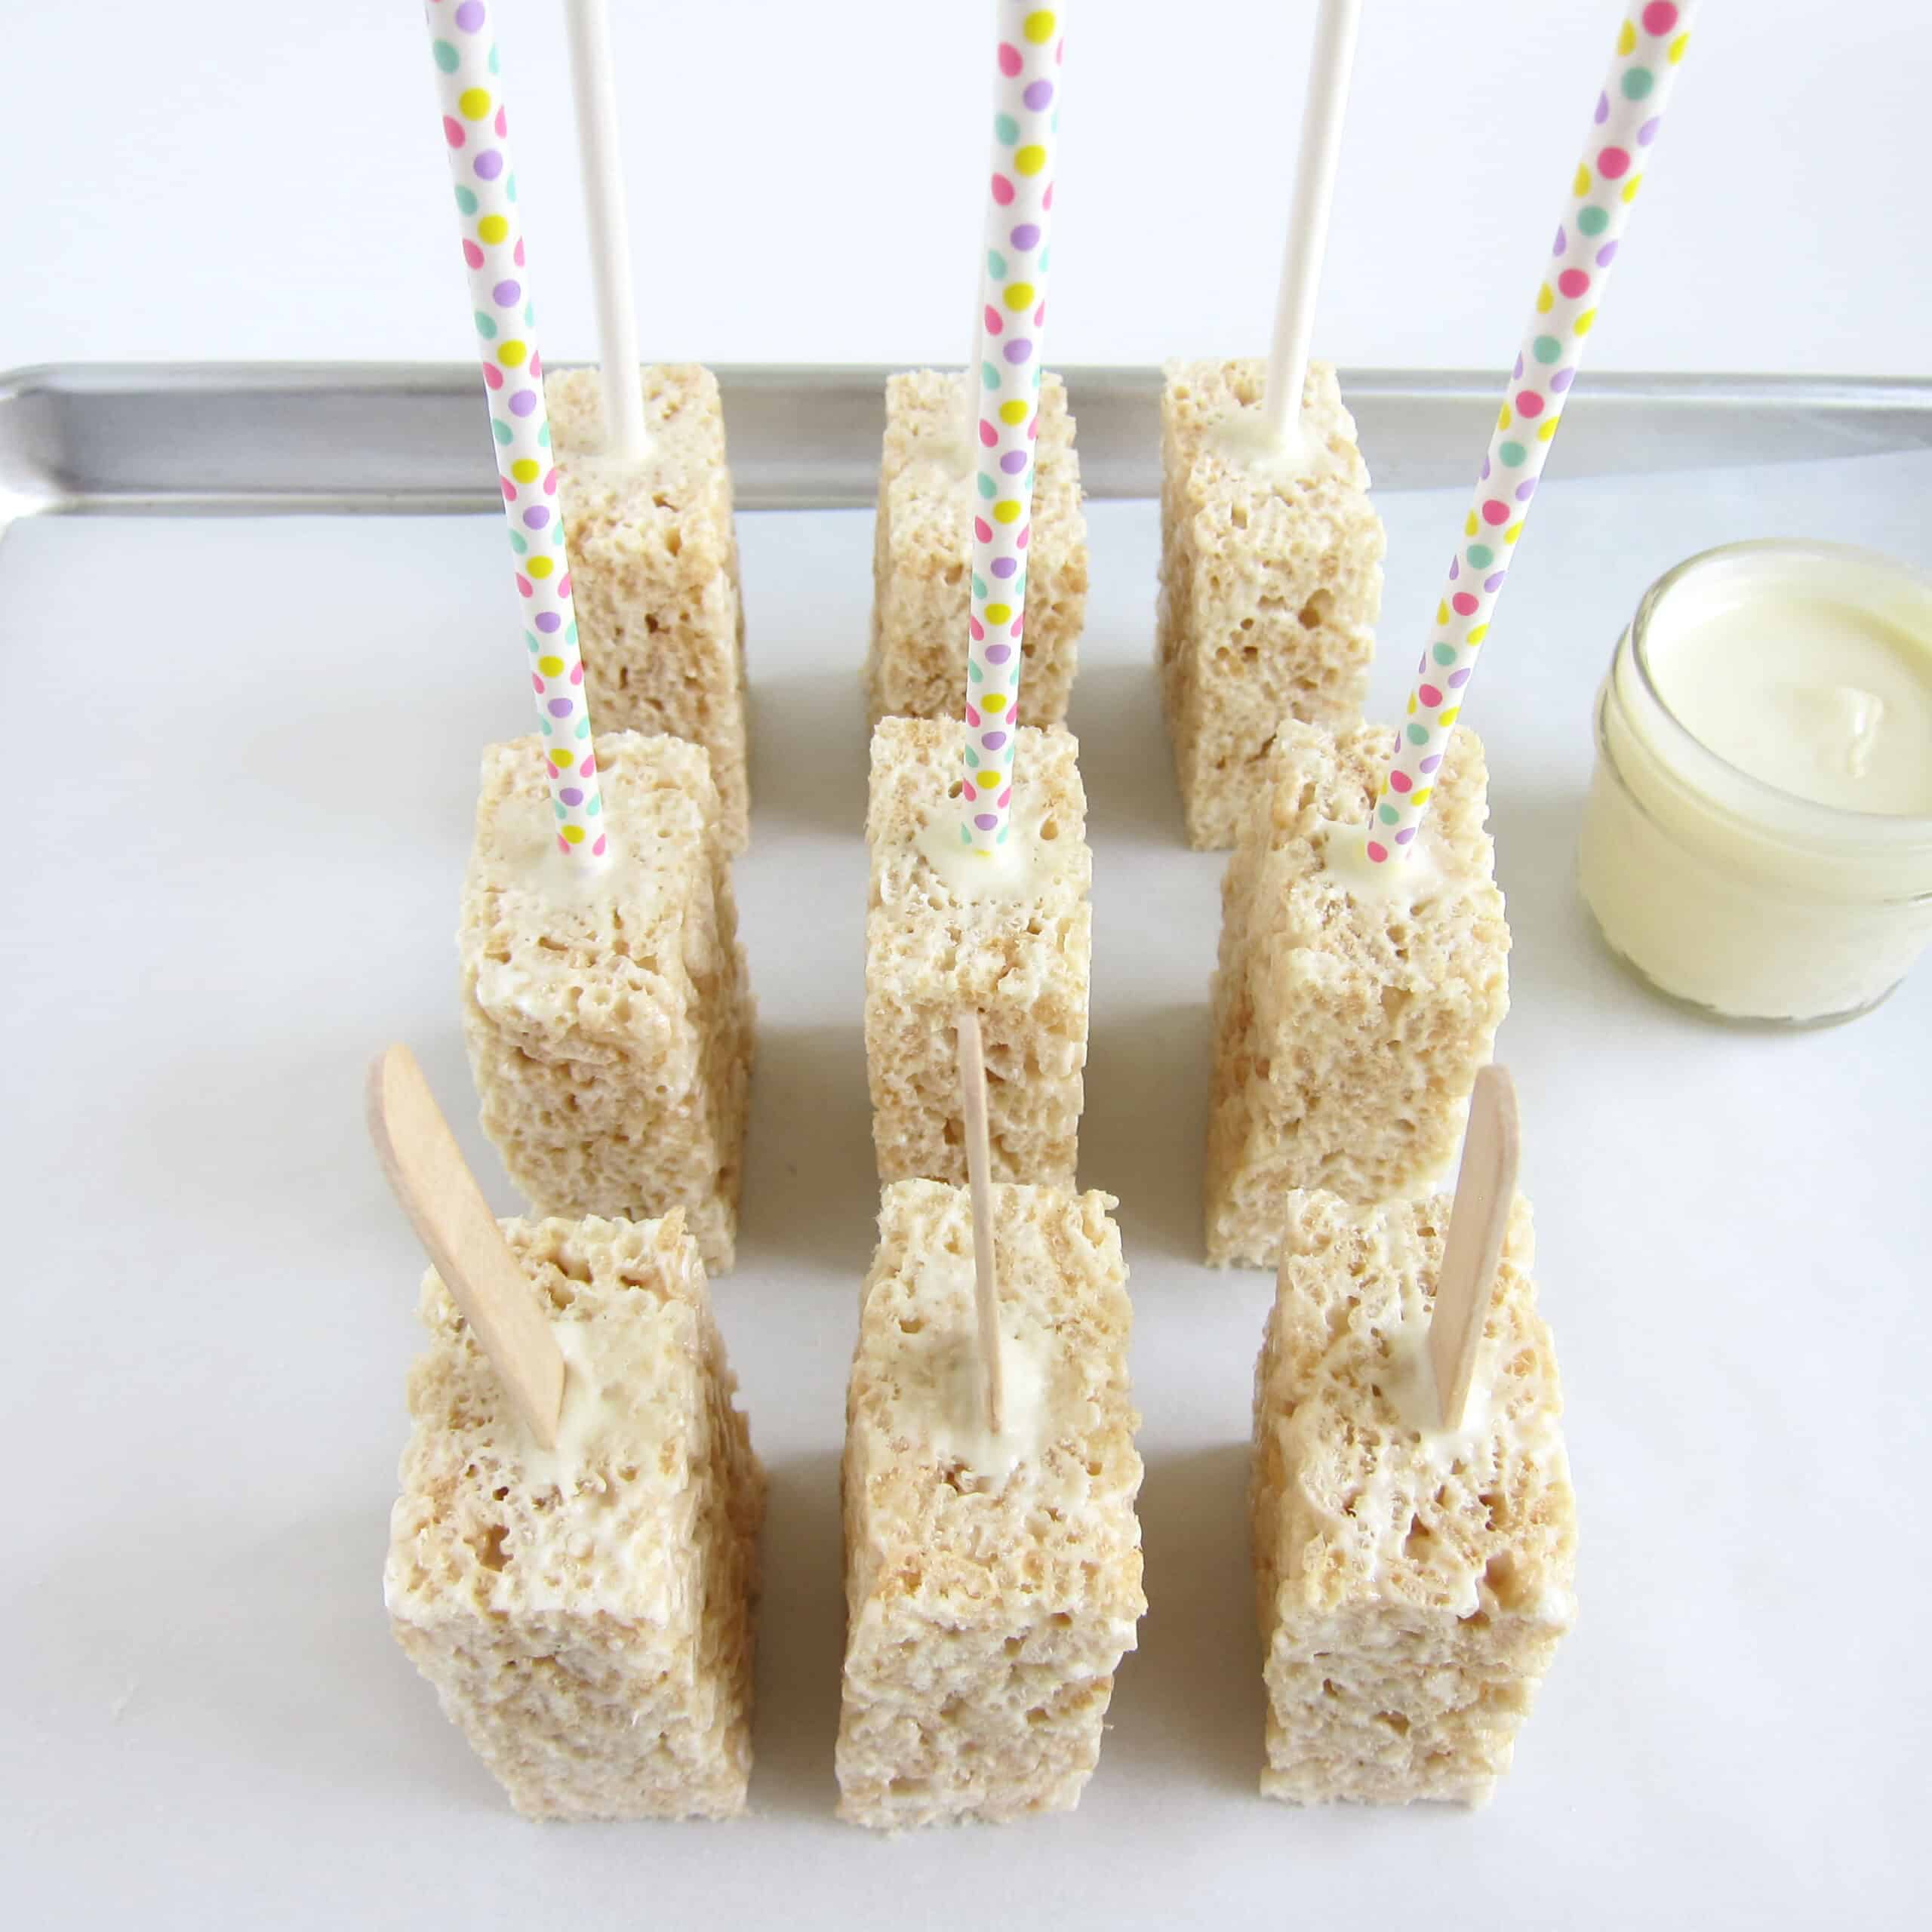 Rice Krispie treats with popsicle sticks, lolllipop sticks, and popsicle sticks secured with melted white chocolate.